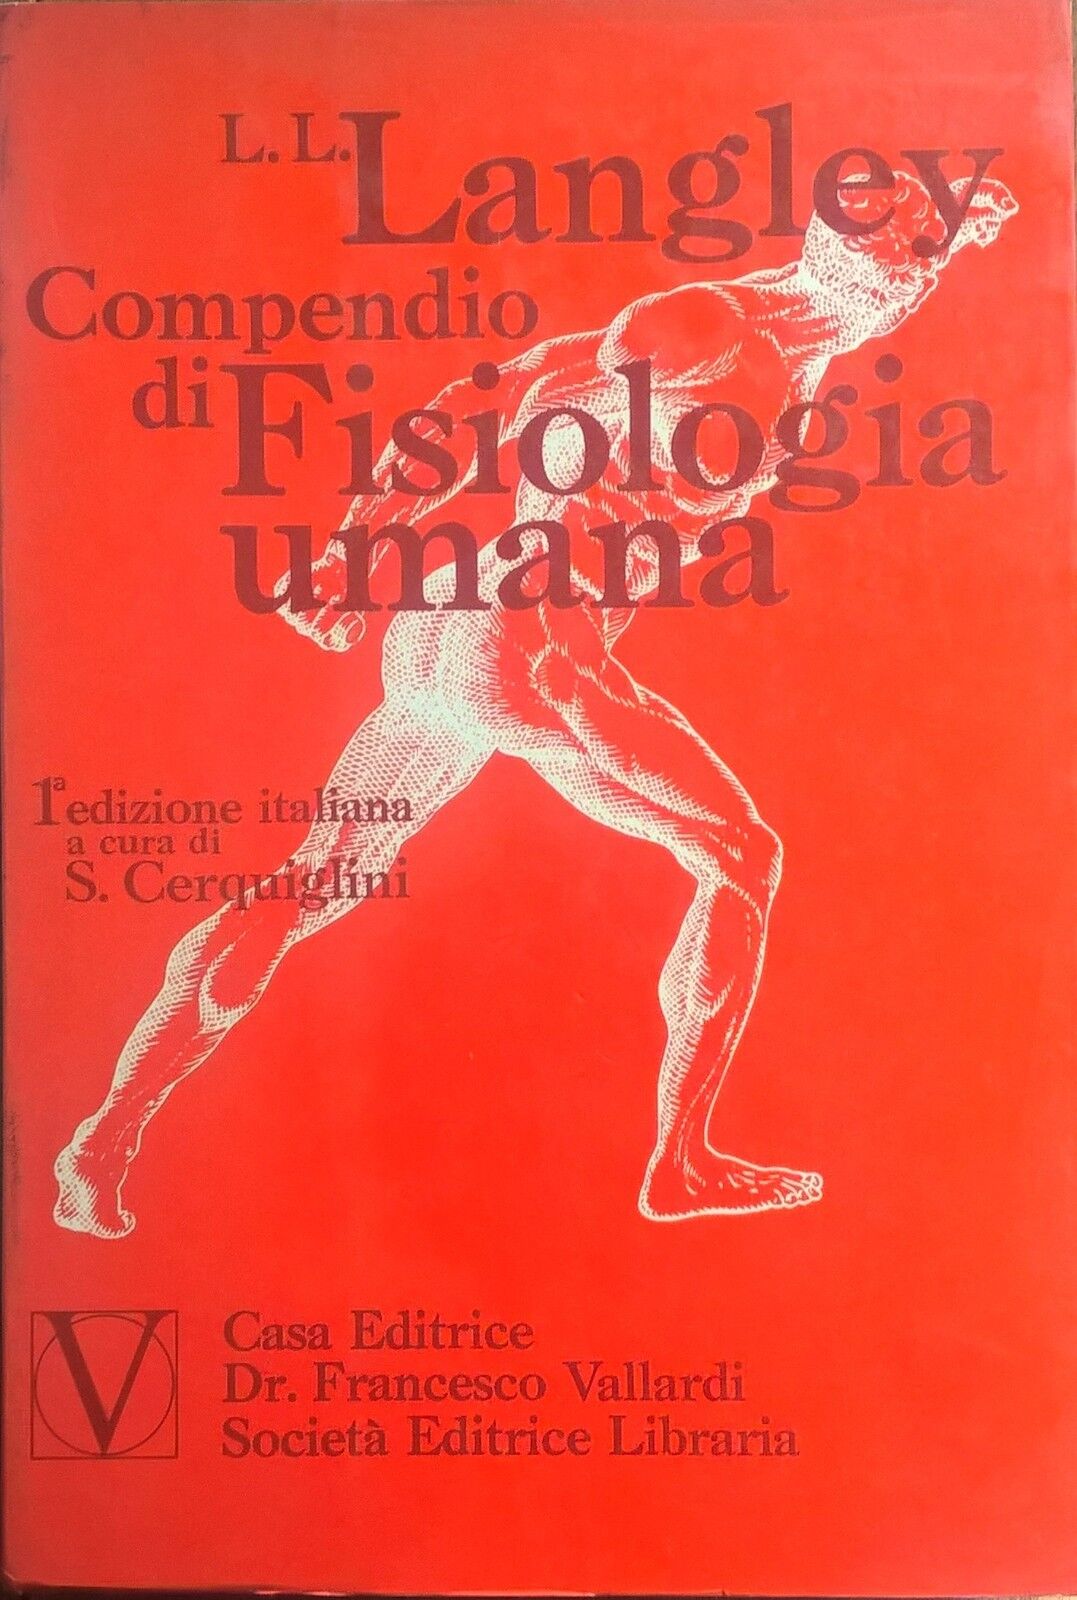 Compendio di Fisiologia umana - Langley (Vallardi 1975) Ca